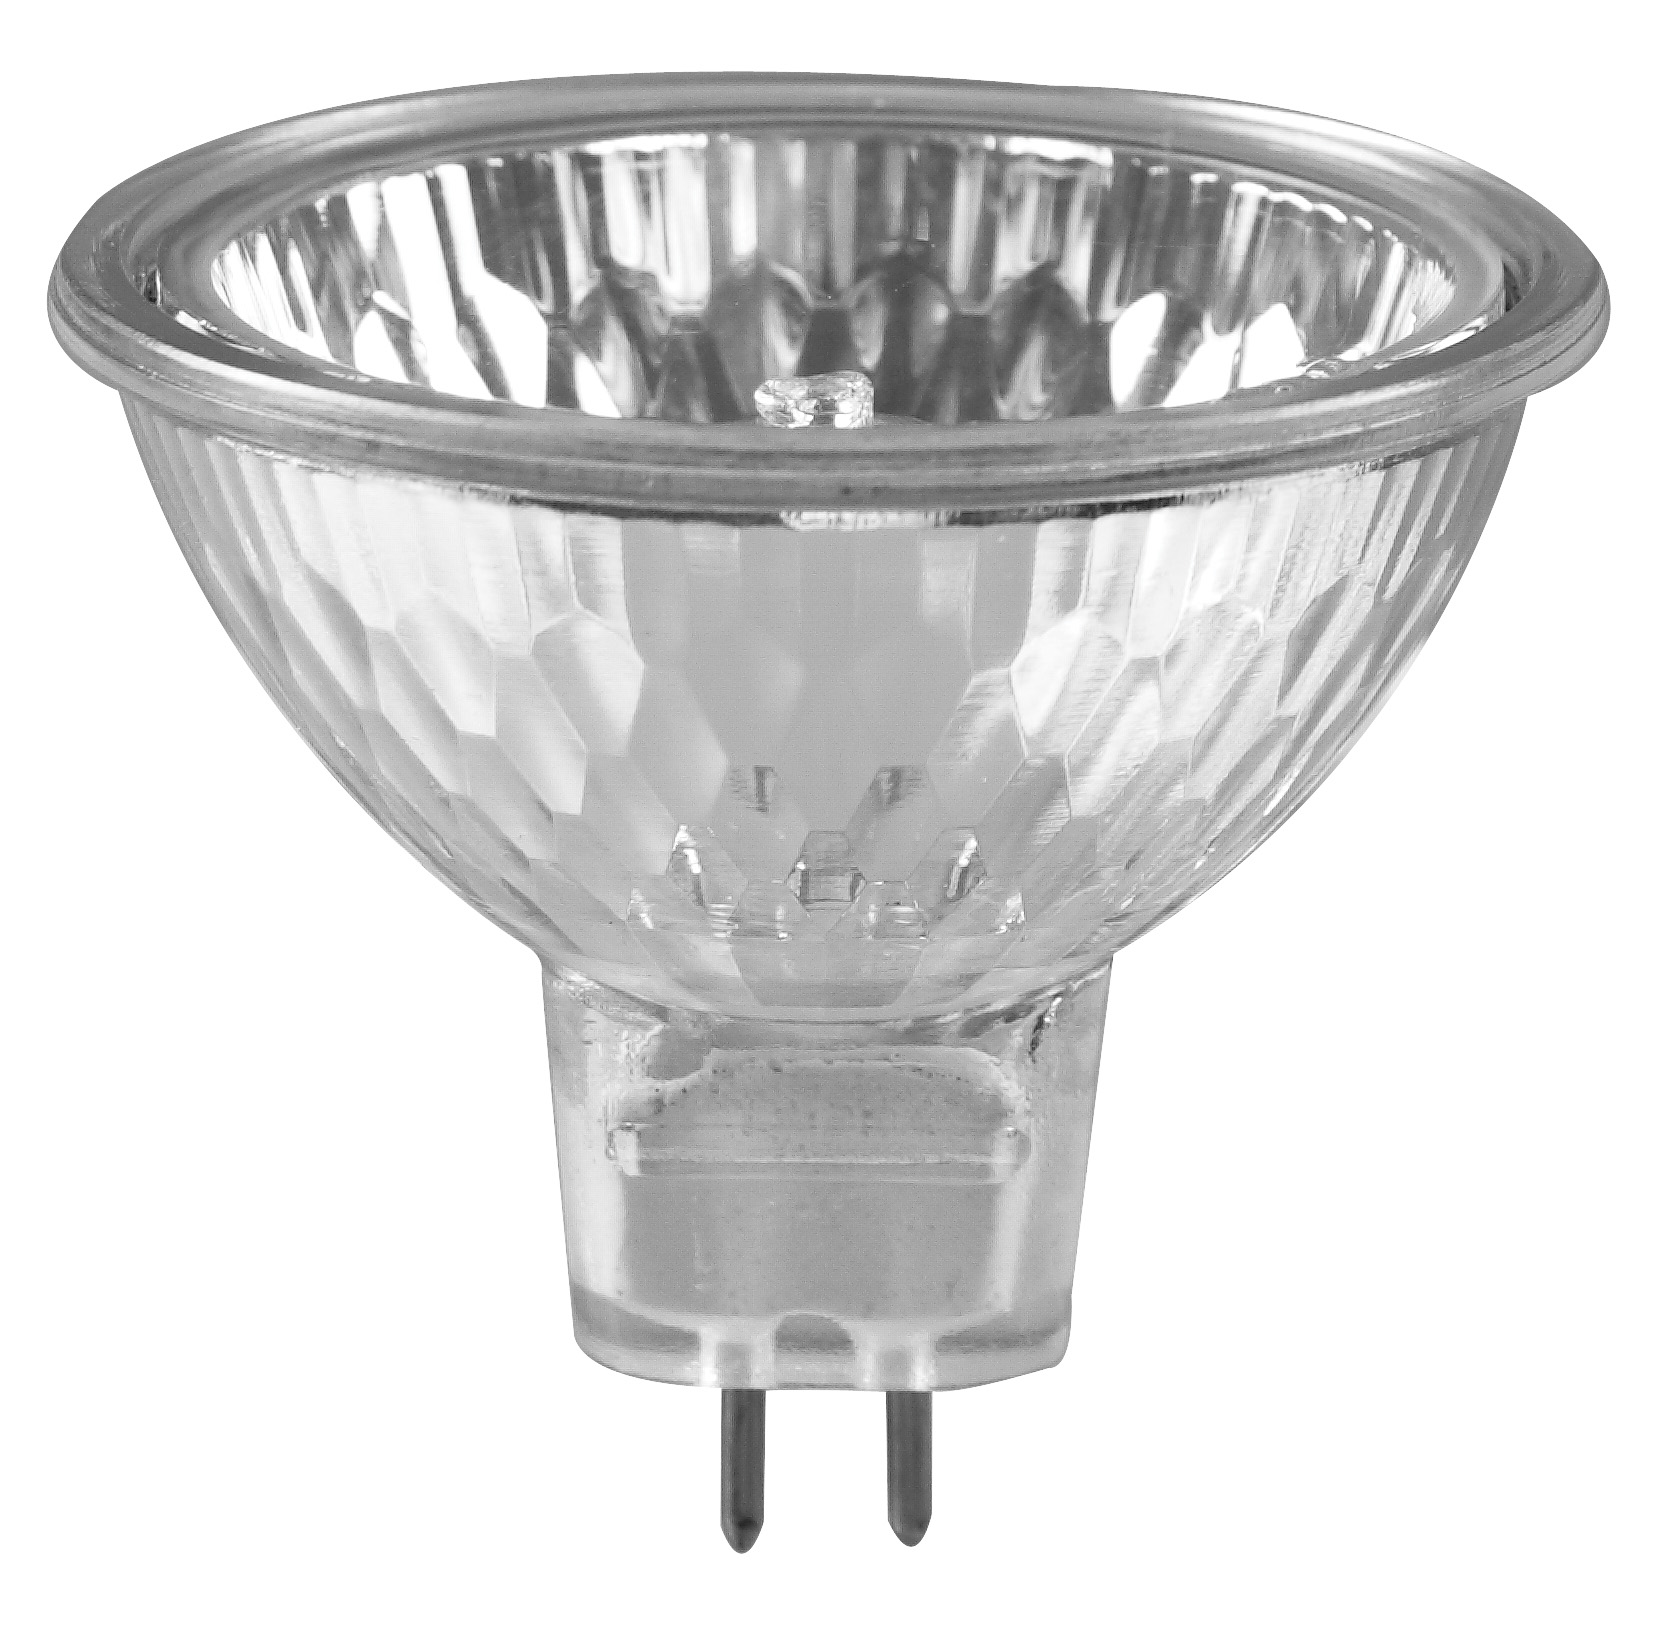 Slyvania 35W 12V MR16  GU5.3 Dichroic Lamp Light Bulb Halogen Quality 4513 NEW 